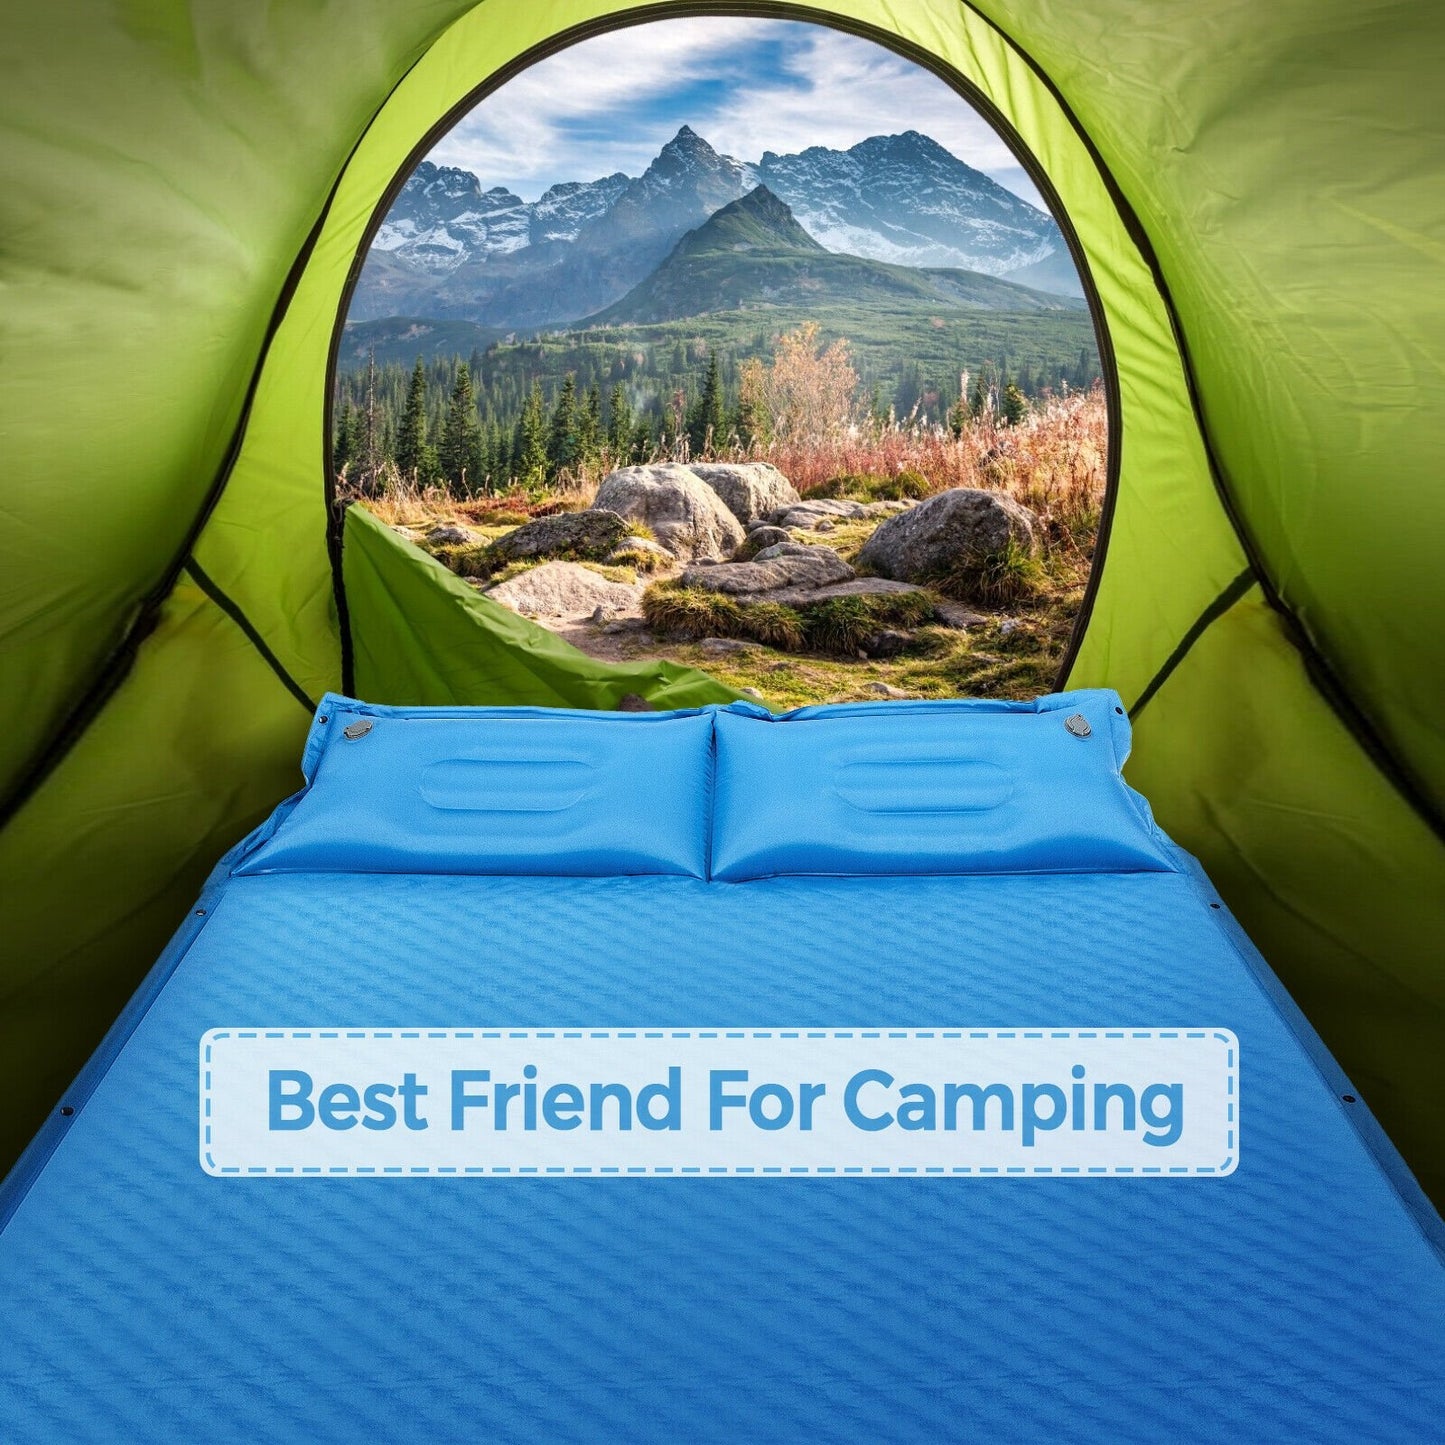 Self-Inflating Camping Outdoor Sleeping Mat with Pillows Bag, Blue